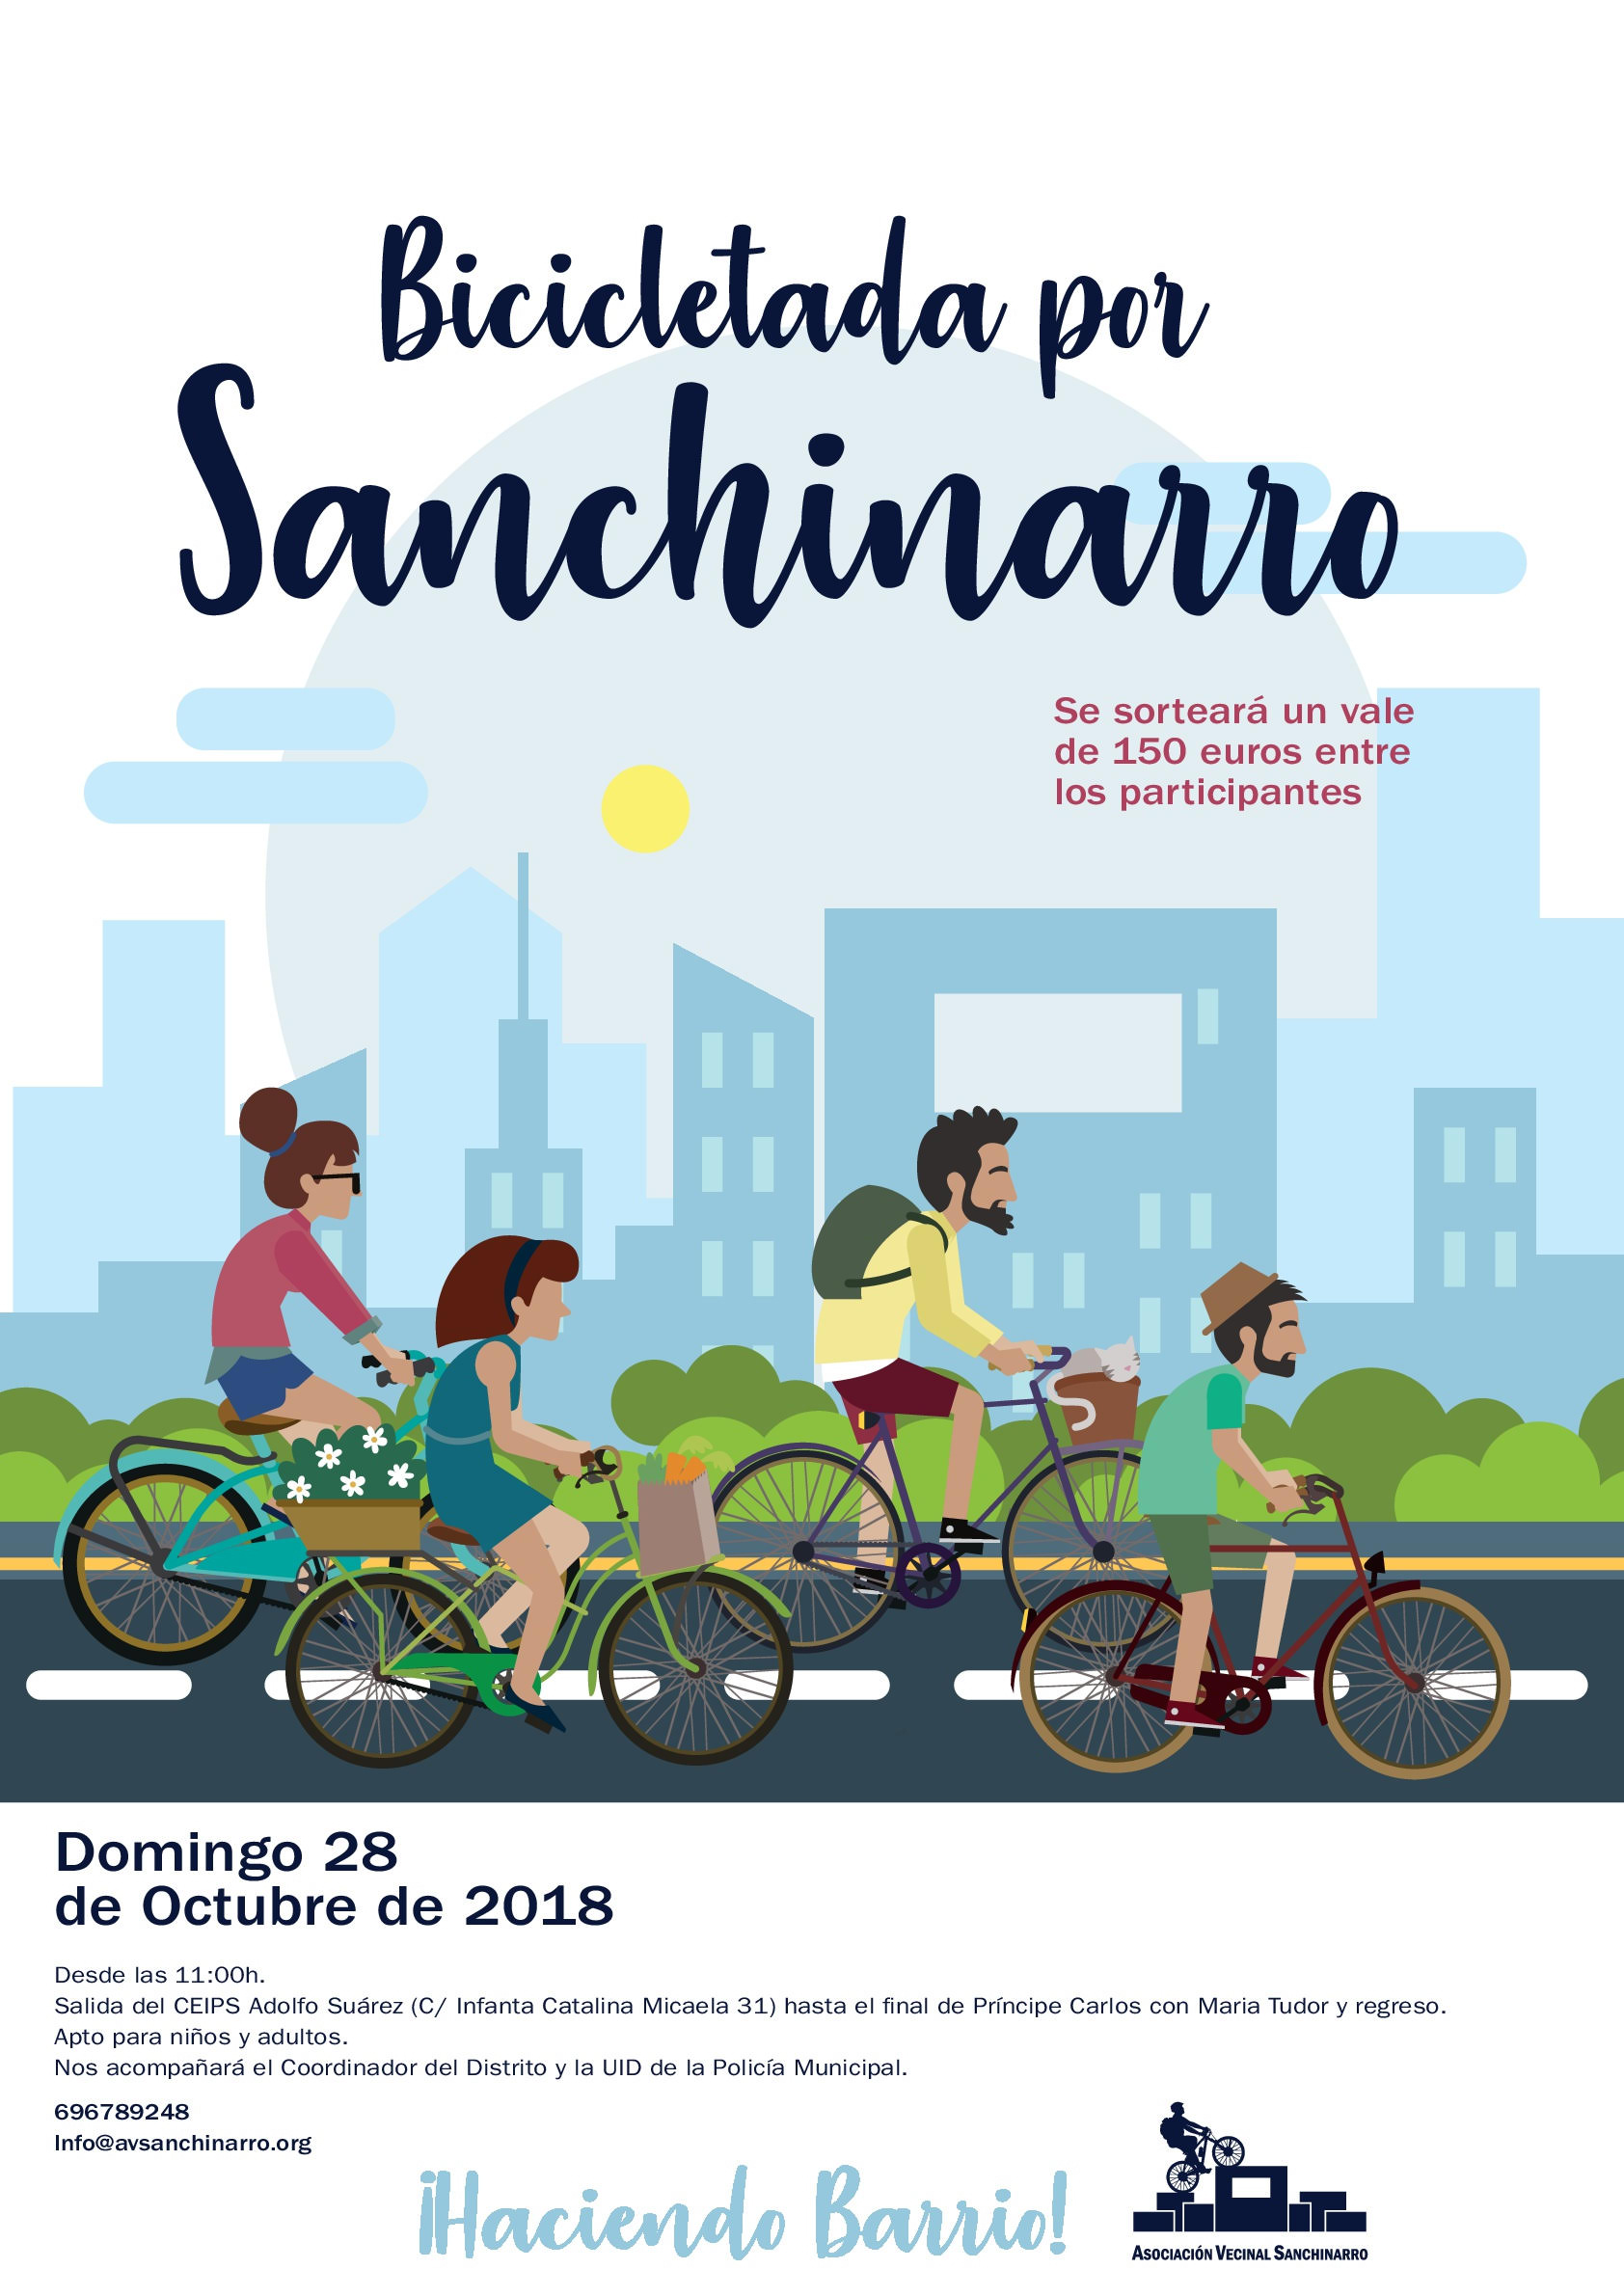 Bicicletada por Sanchinarro